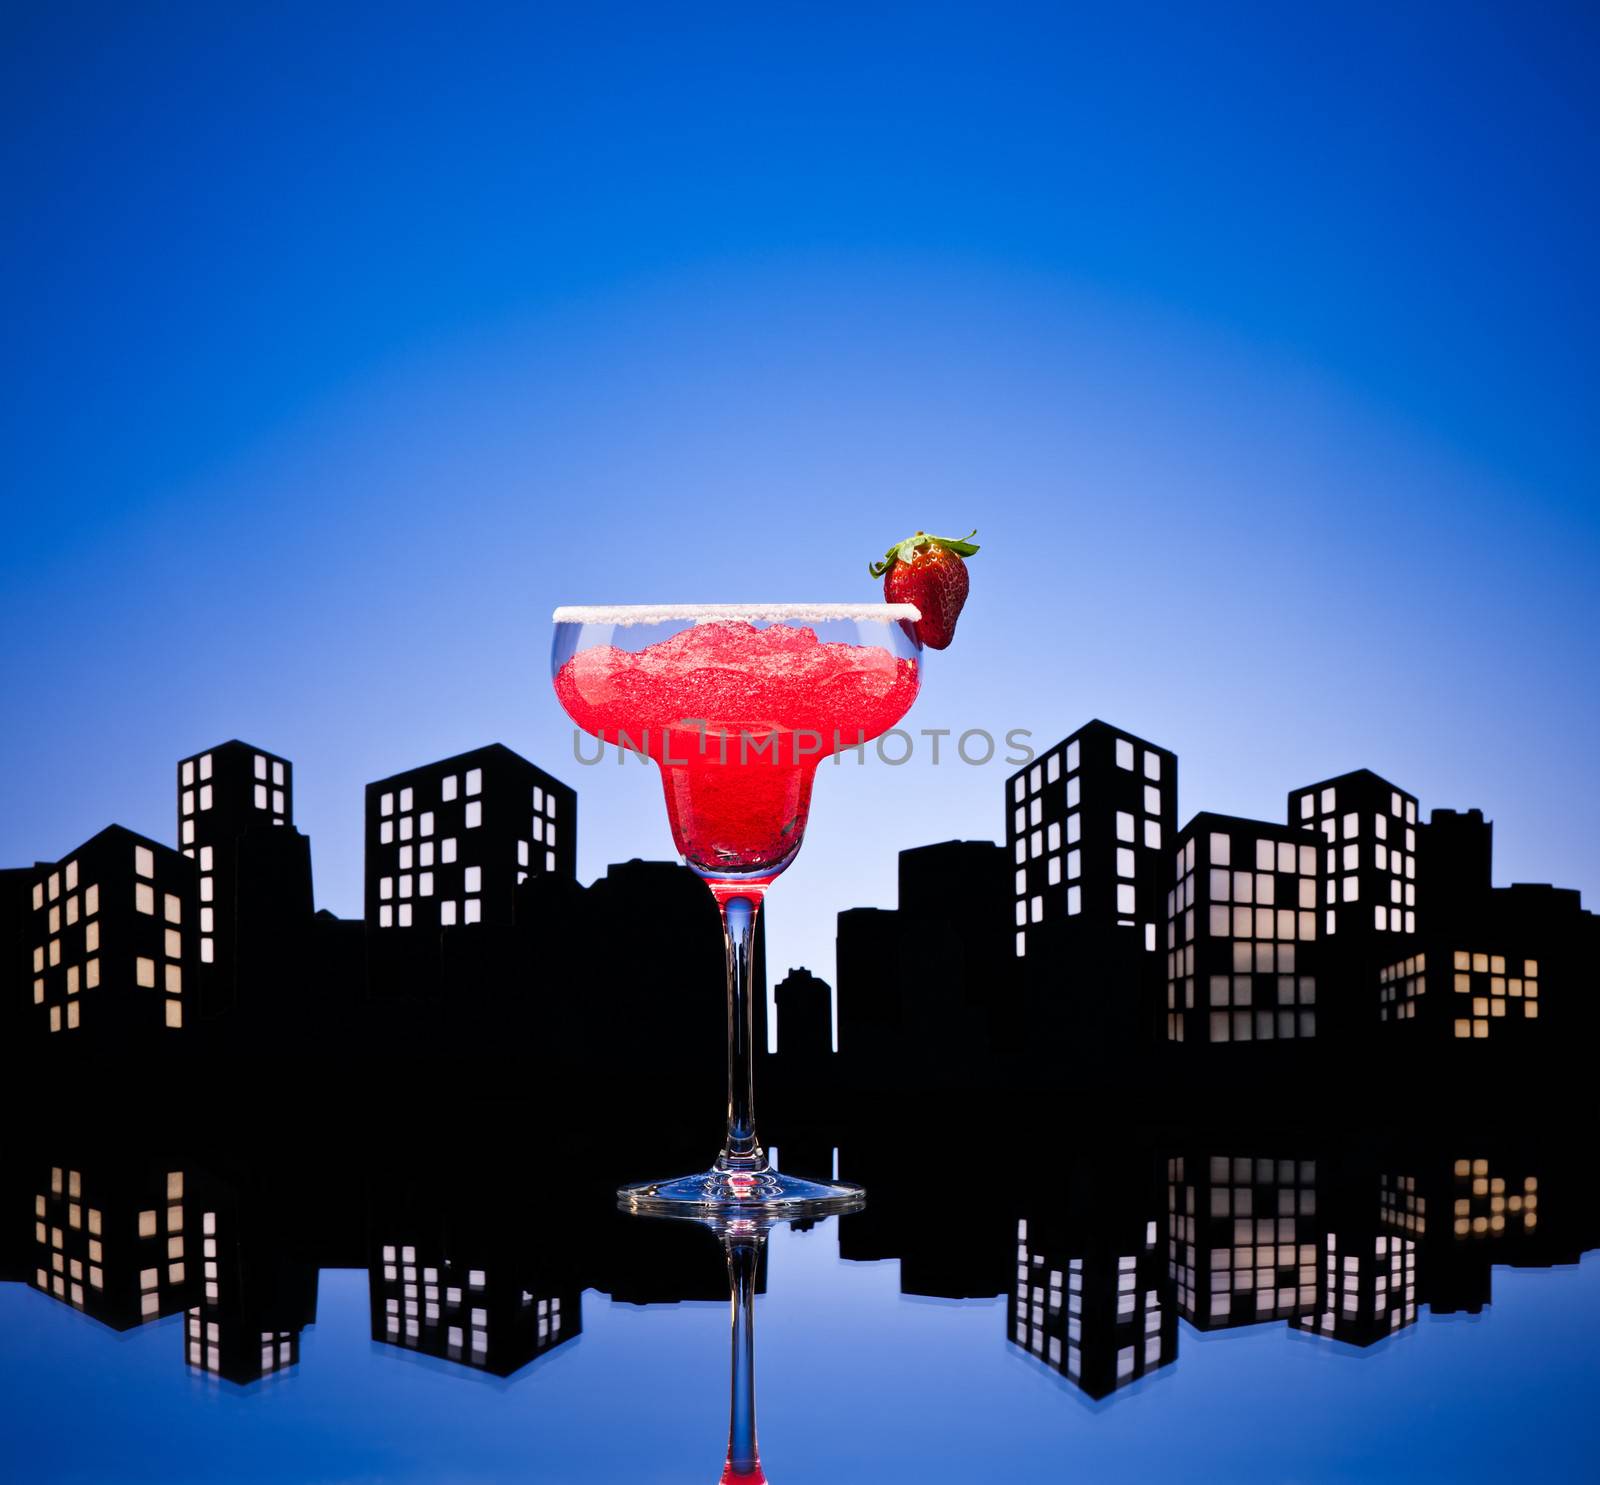 Metropolis strawberry Margarita  cocktail in city skyline setting